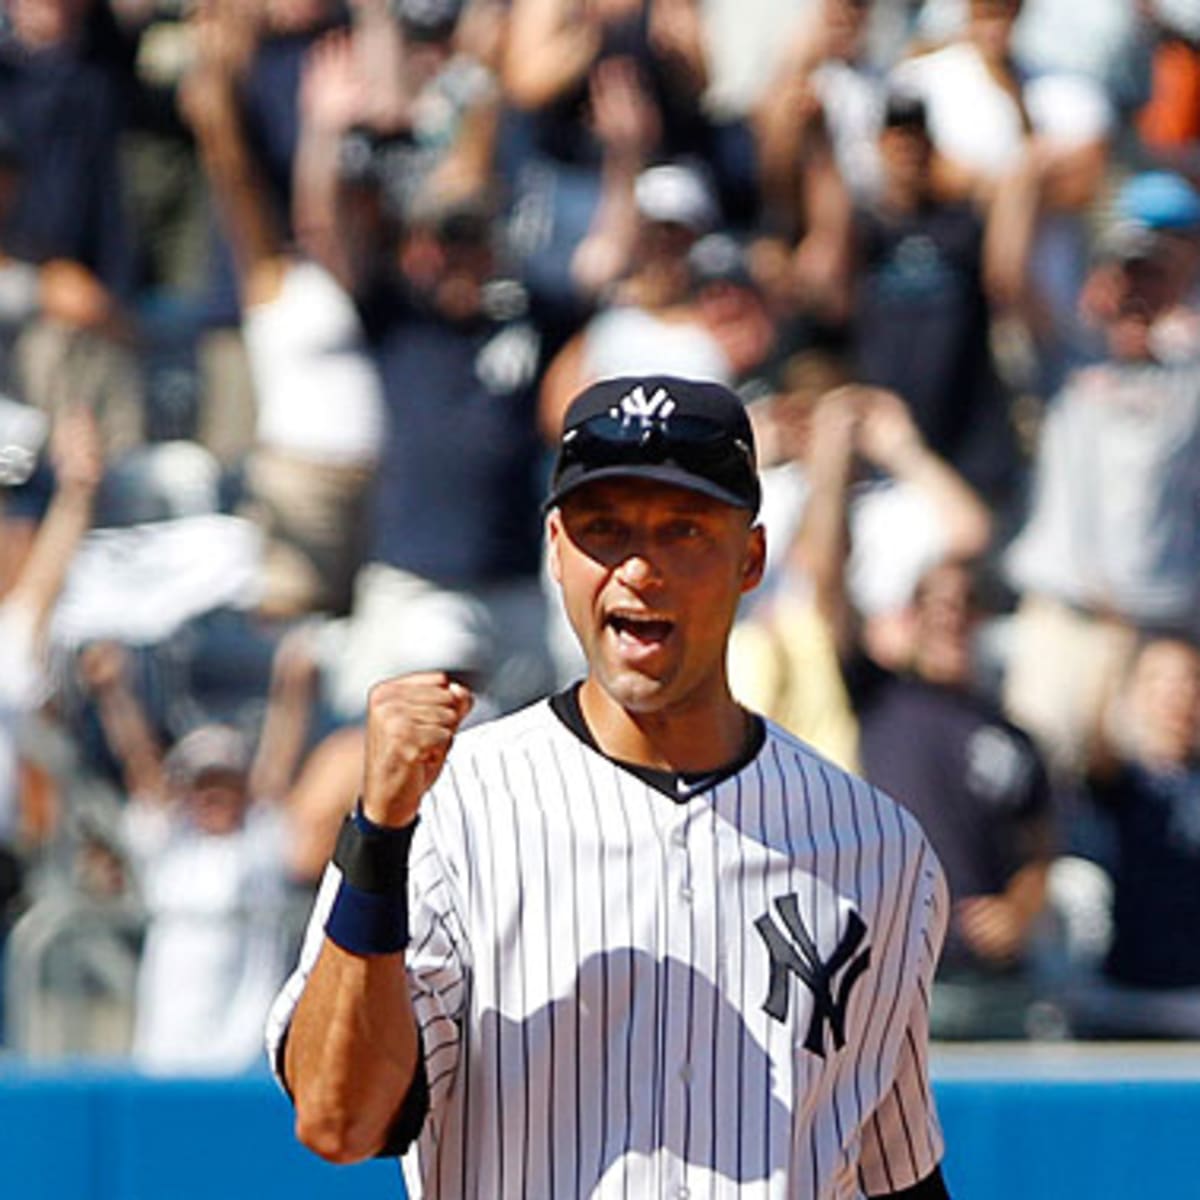 Posada retires from Yankees after 17 seasons, 5 titles